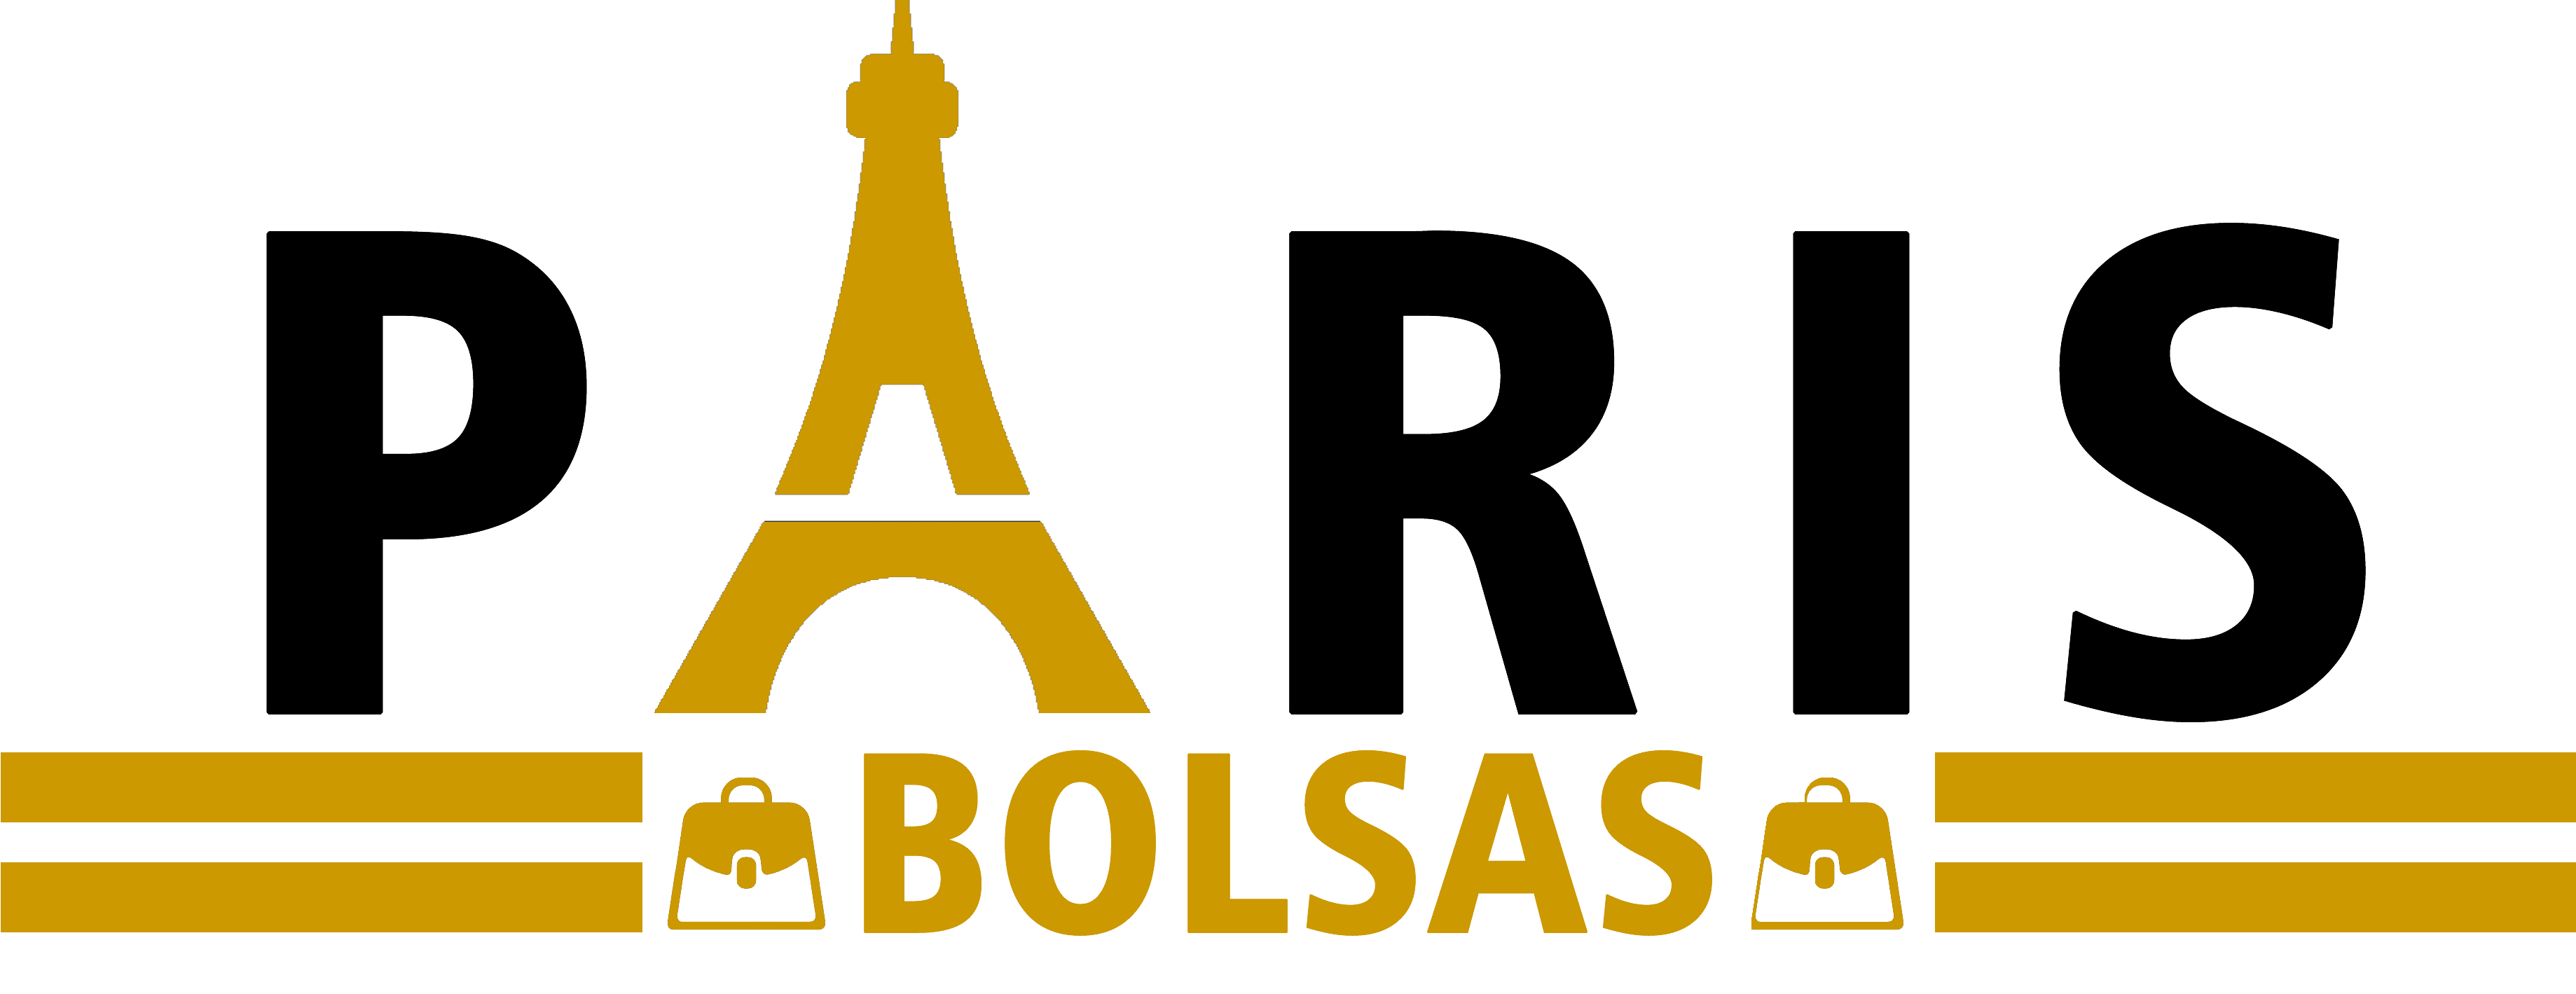 PARIS BOLSAS